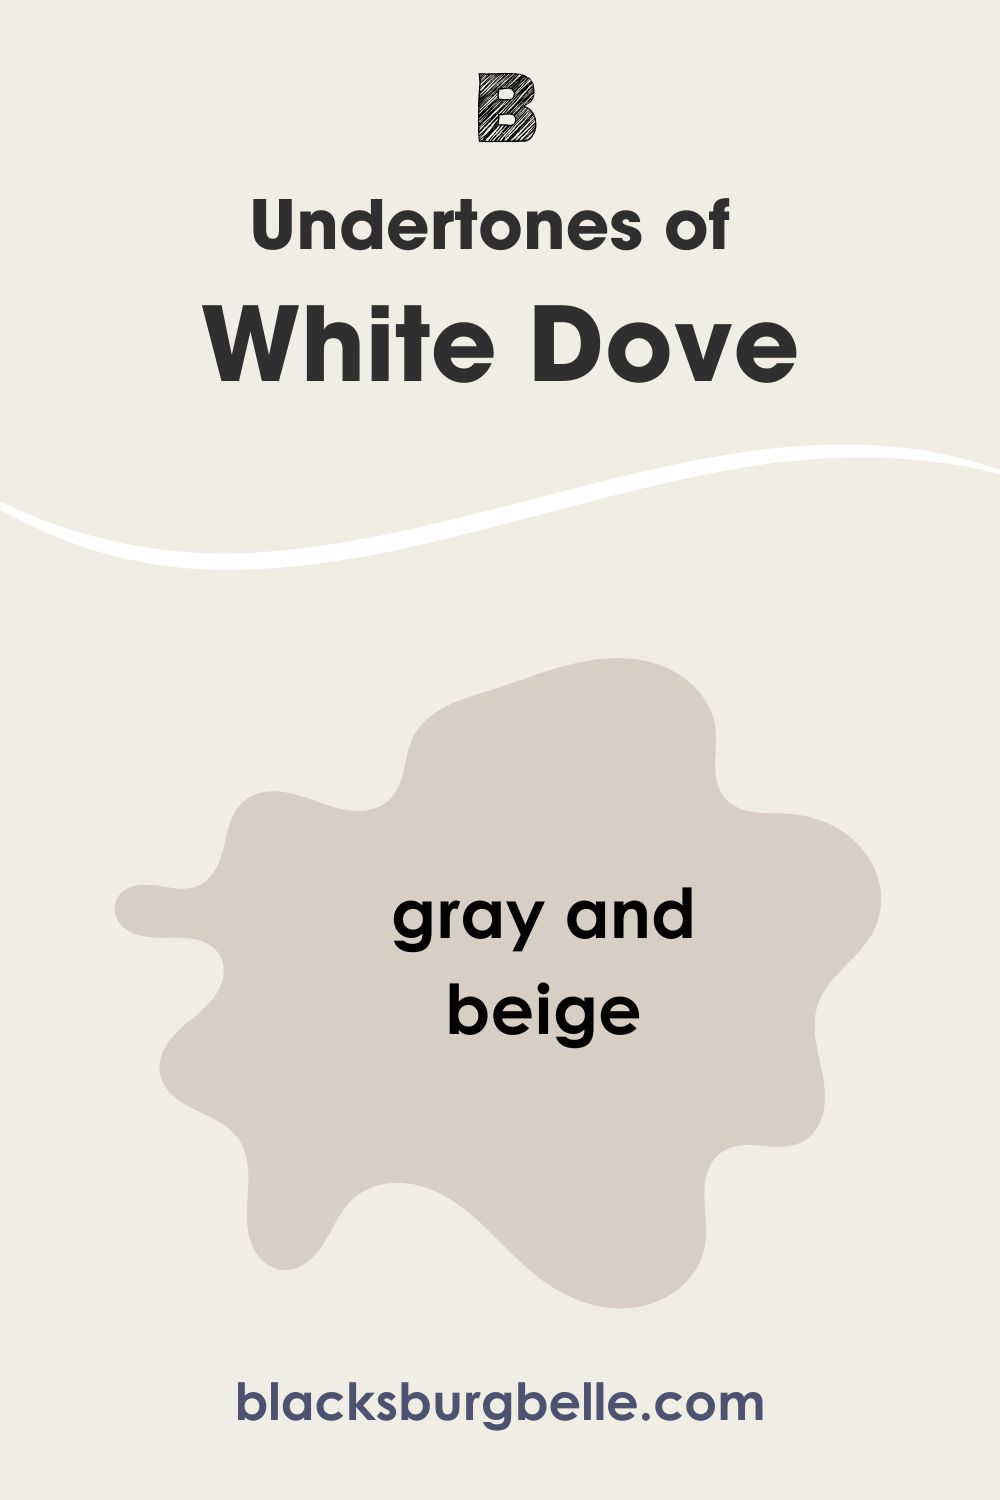 Undertones of White Dove